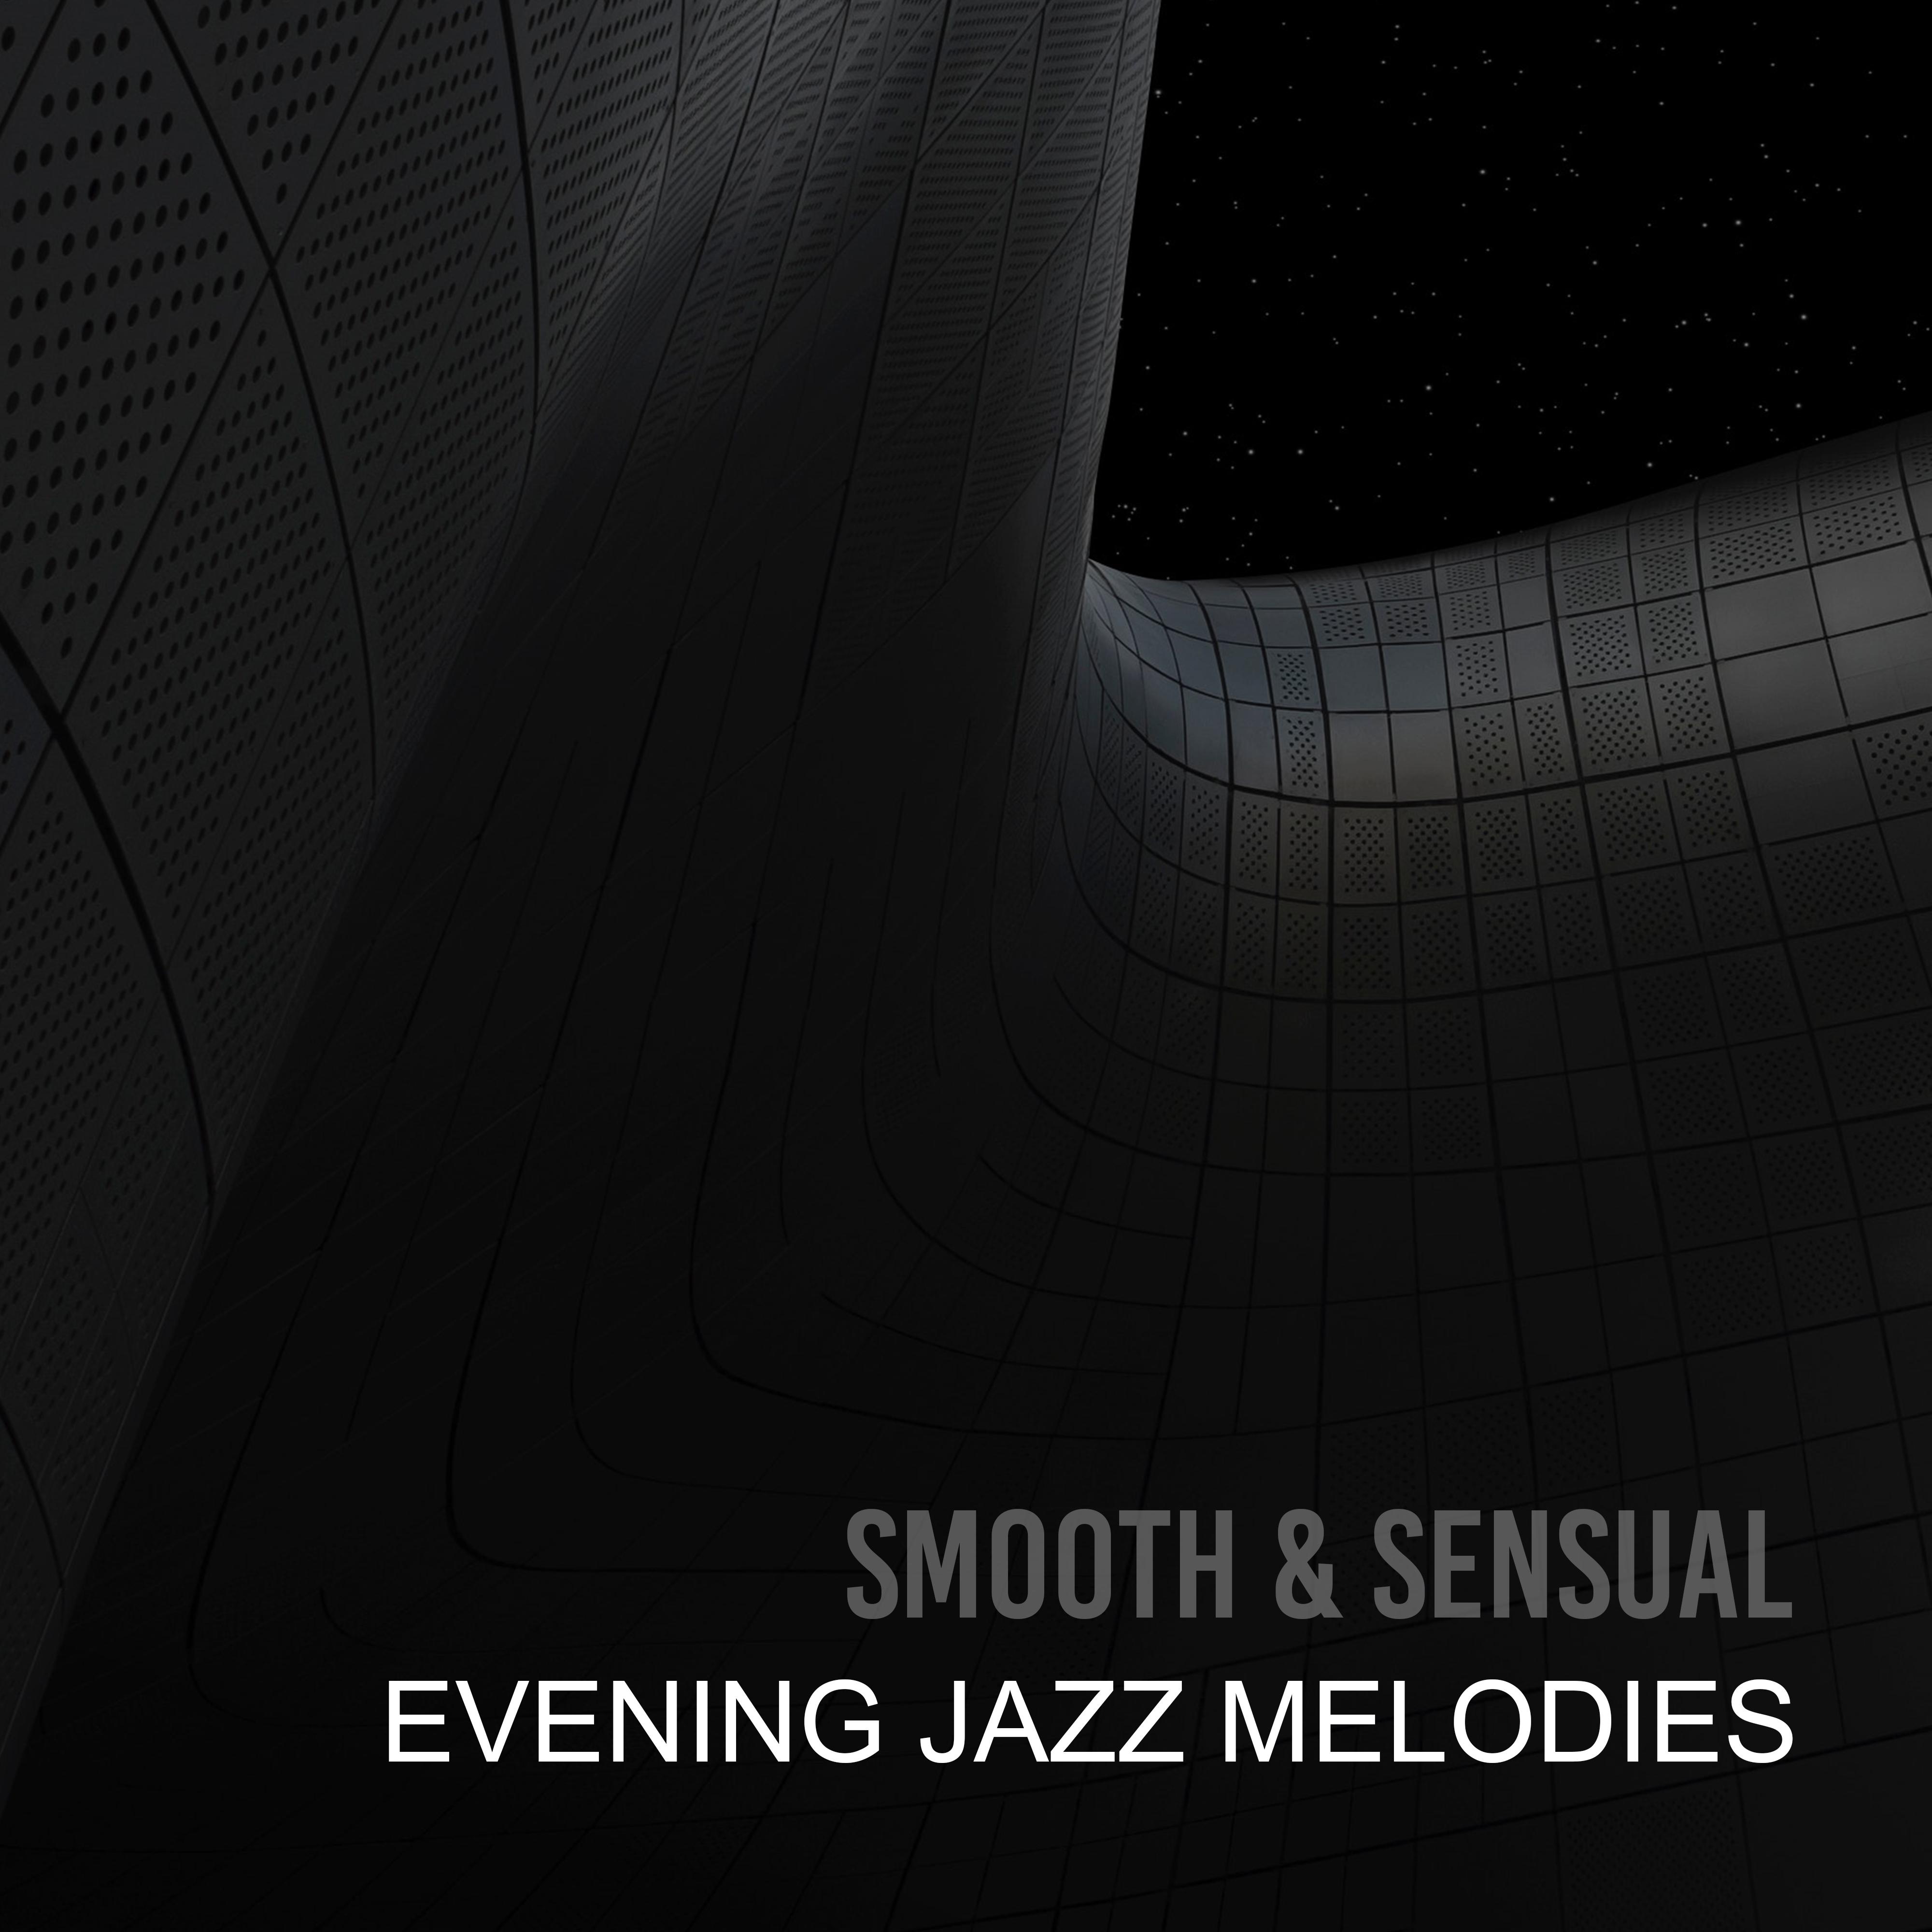 Smooth & Sensual Evening Jazz Melodies